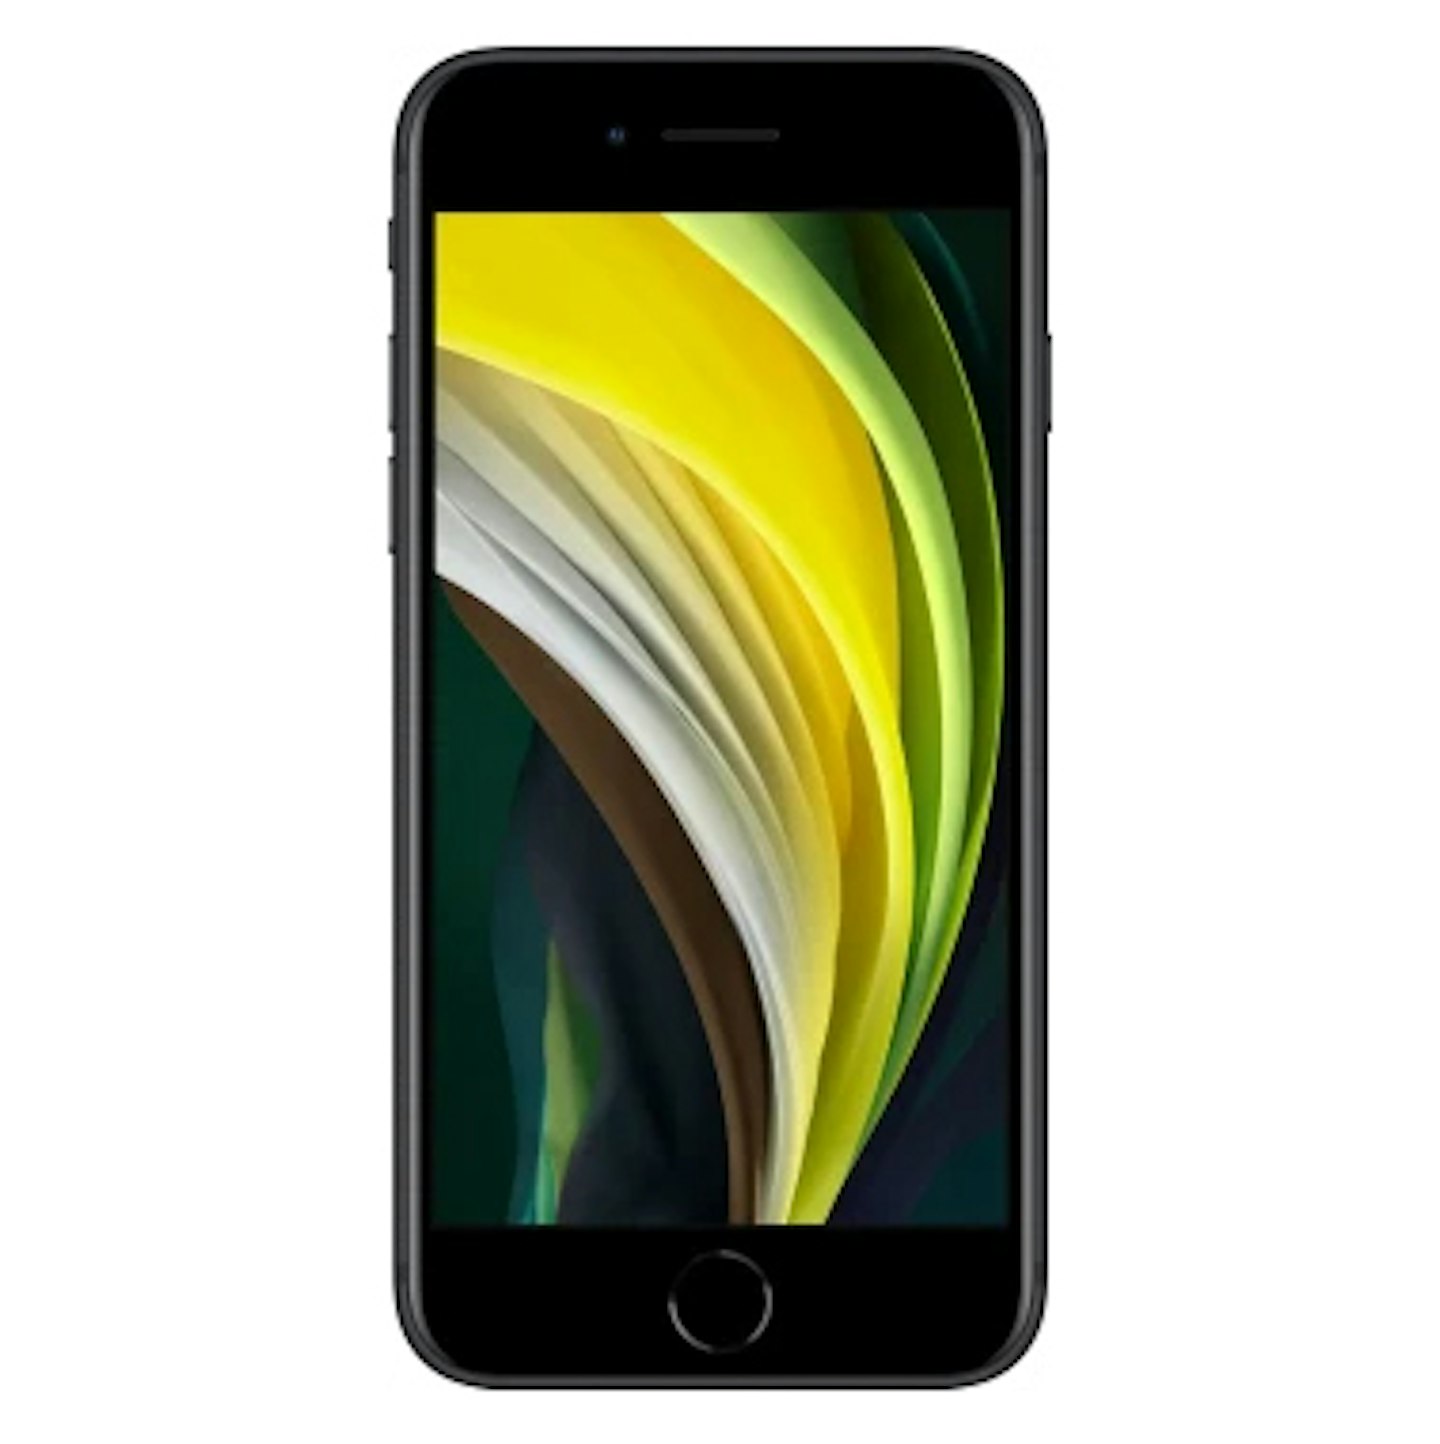 Apple iPhone SE 64GB Black